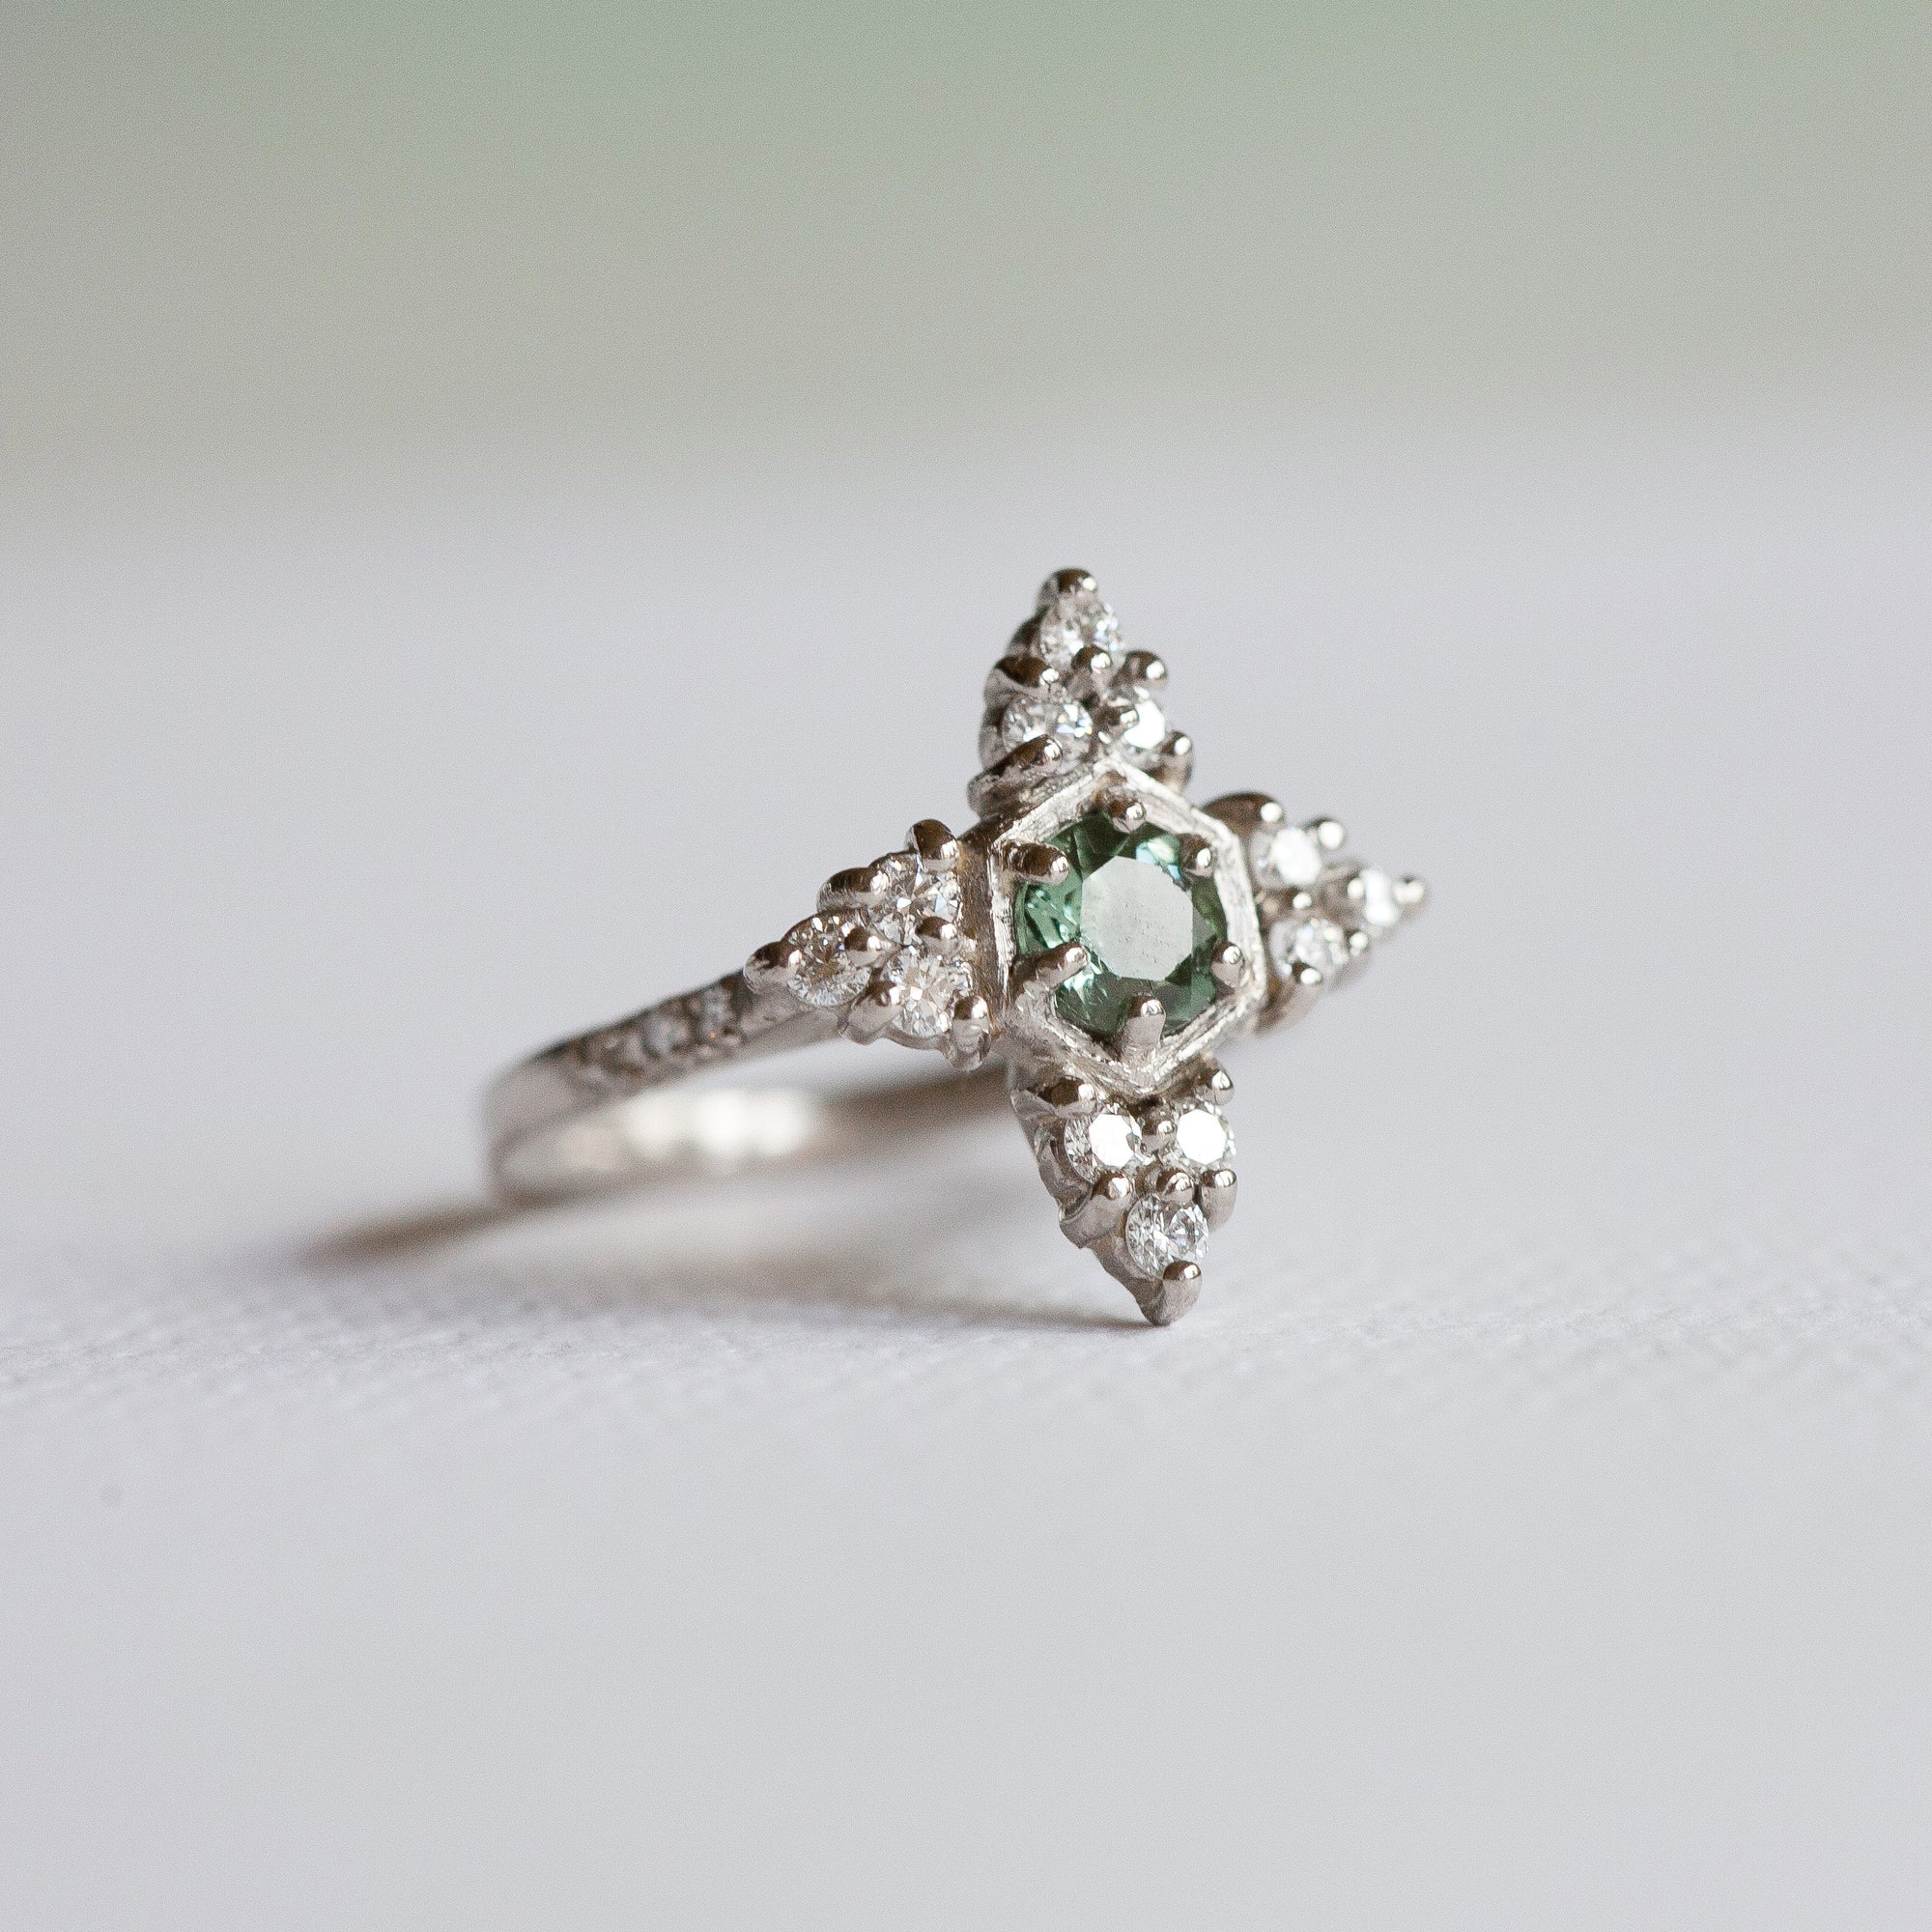 Bespoke green tourmaline and diamond engagement ring